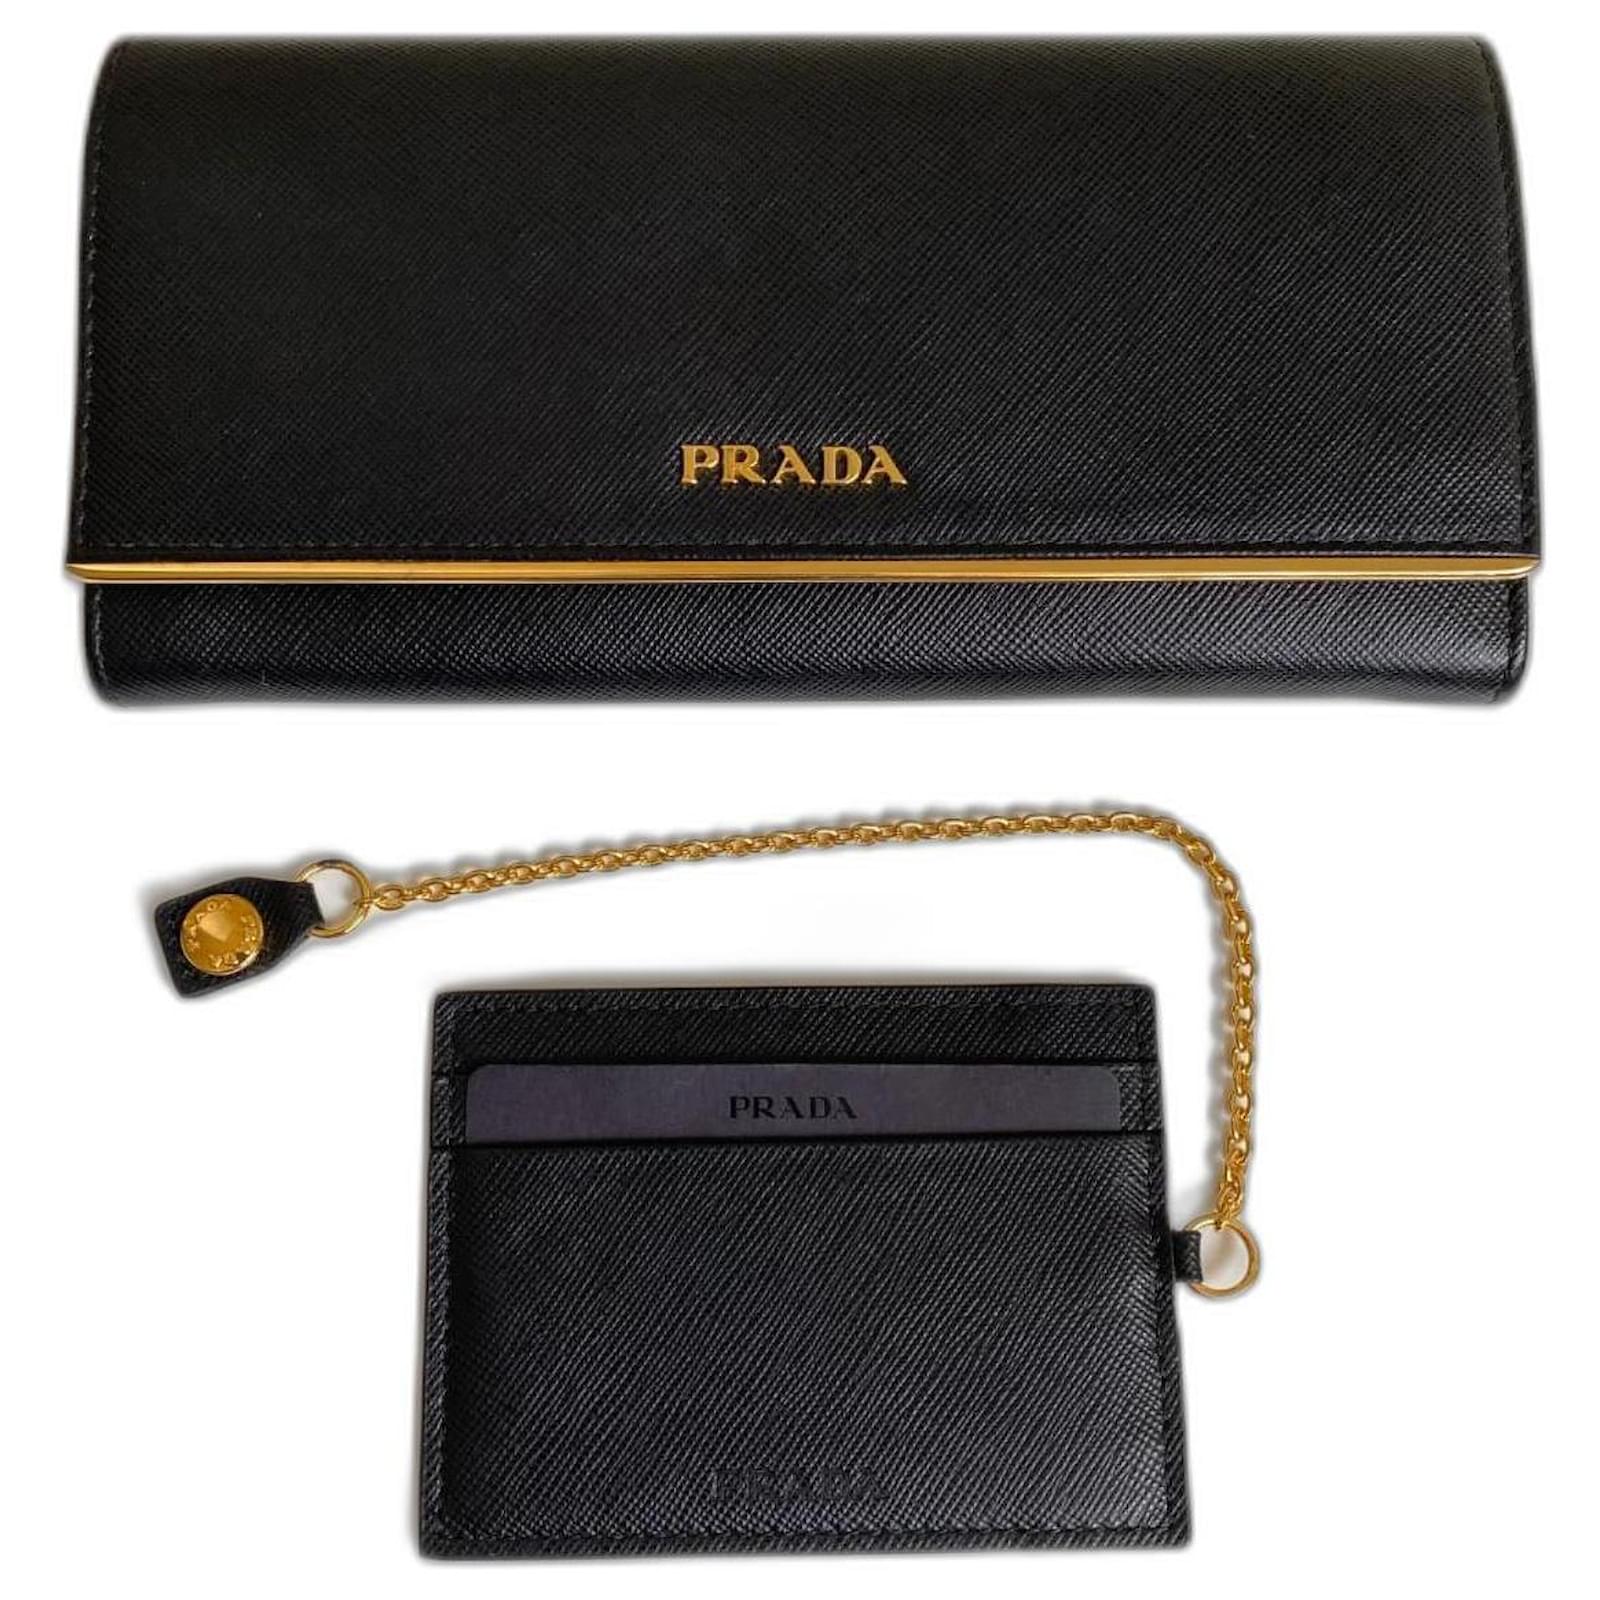 Shop Prada | Galleria, Re-Edition, Double Bags & More | FASHIONPHILE